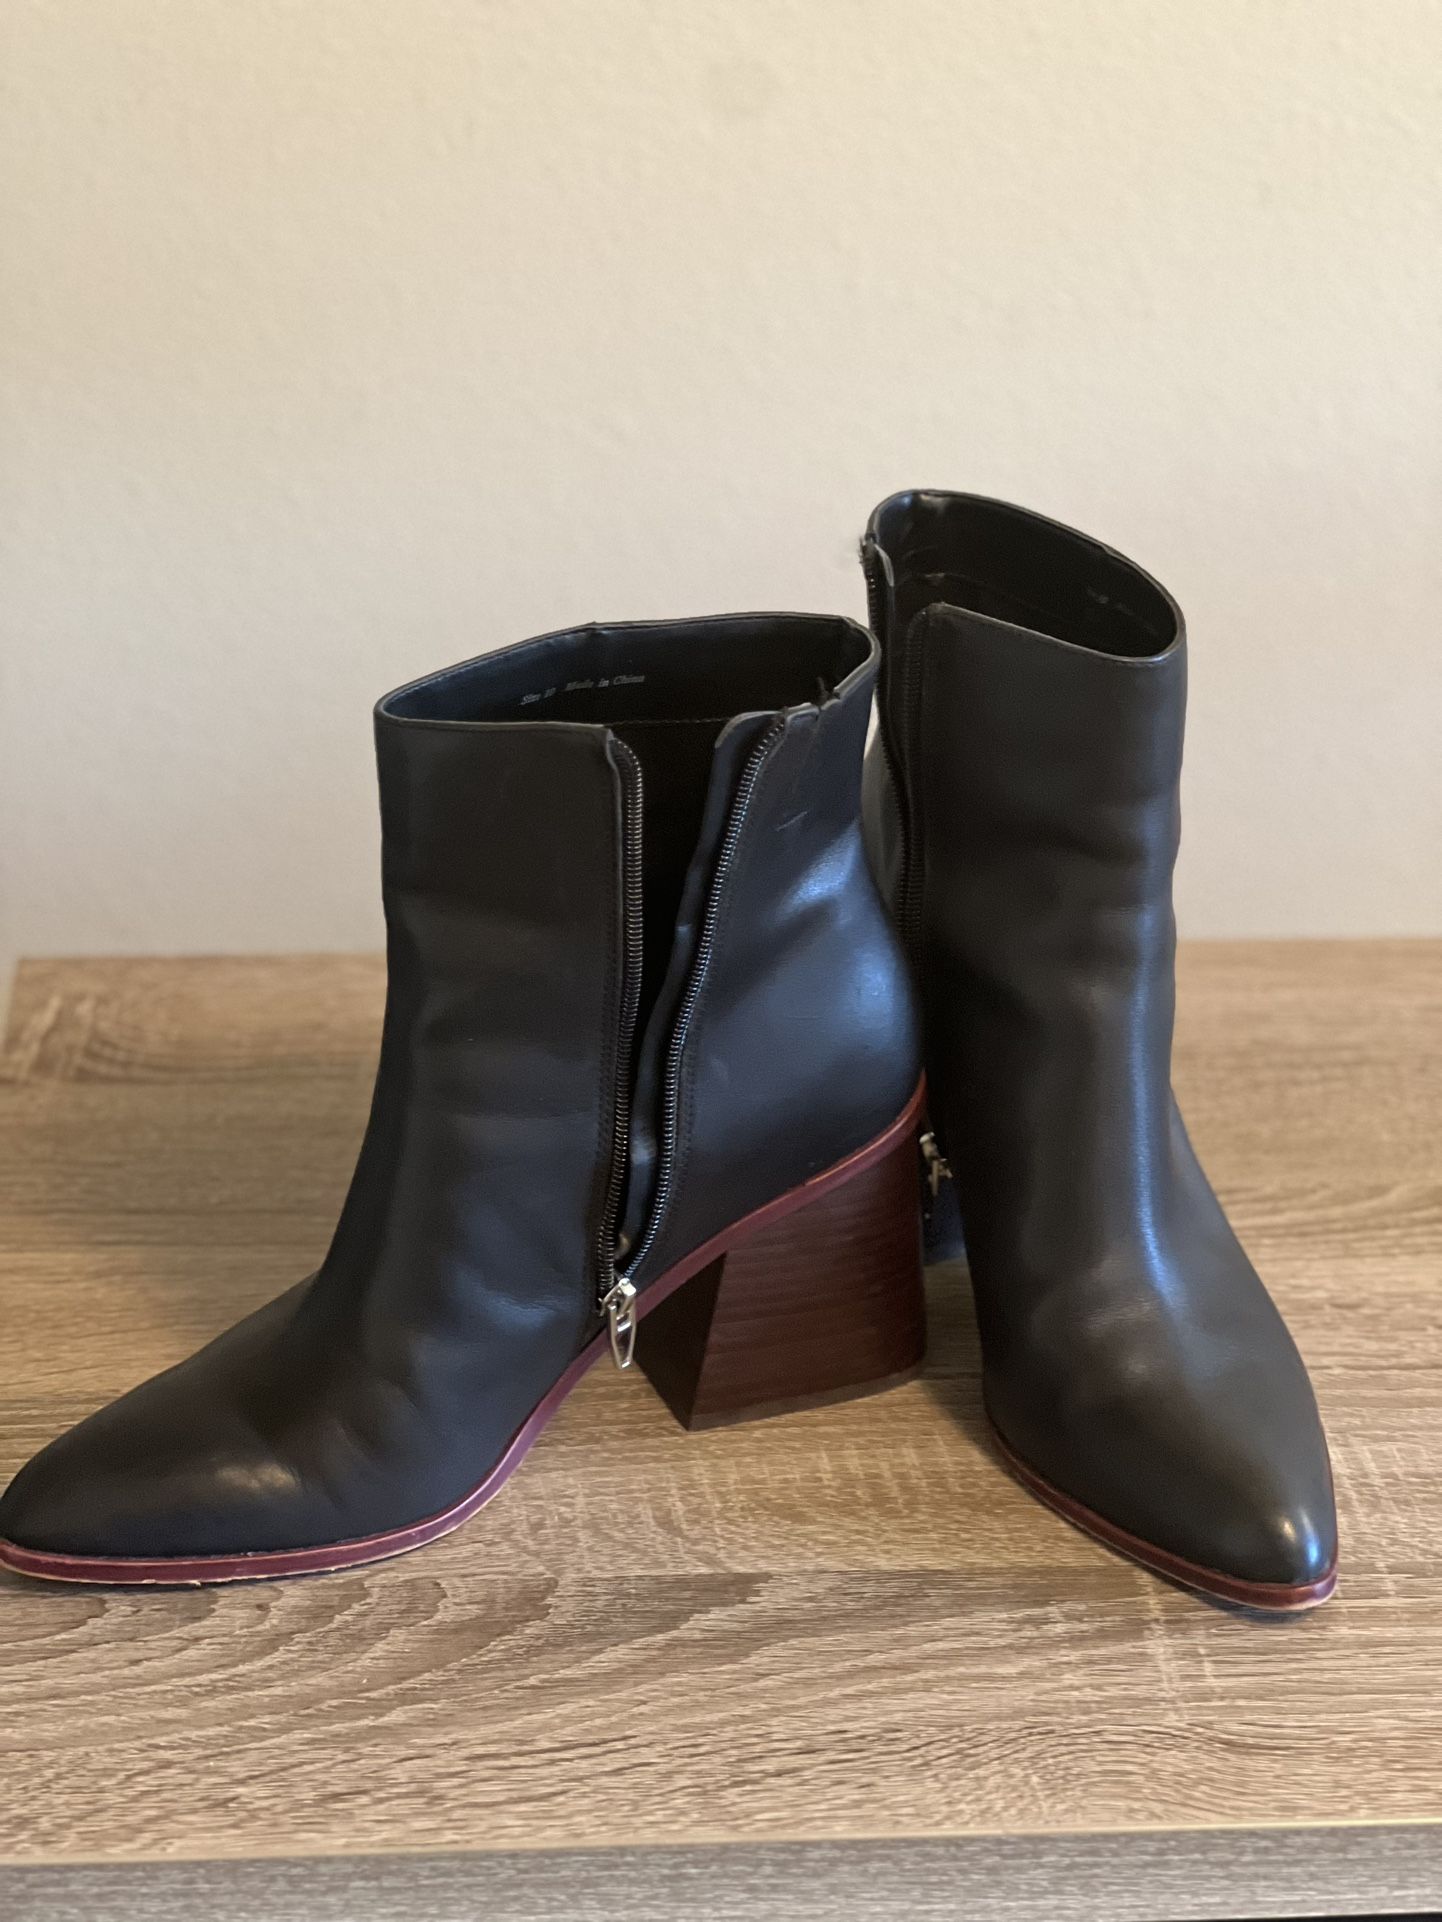 Dolce Vita Size 10 Boots. Black. 3 1/2 Inch heel. 